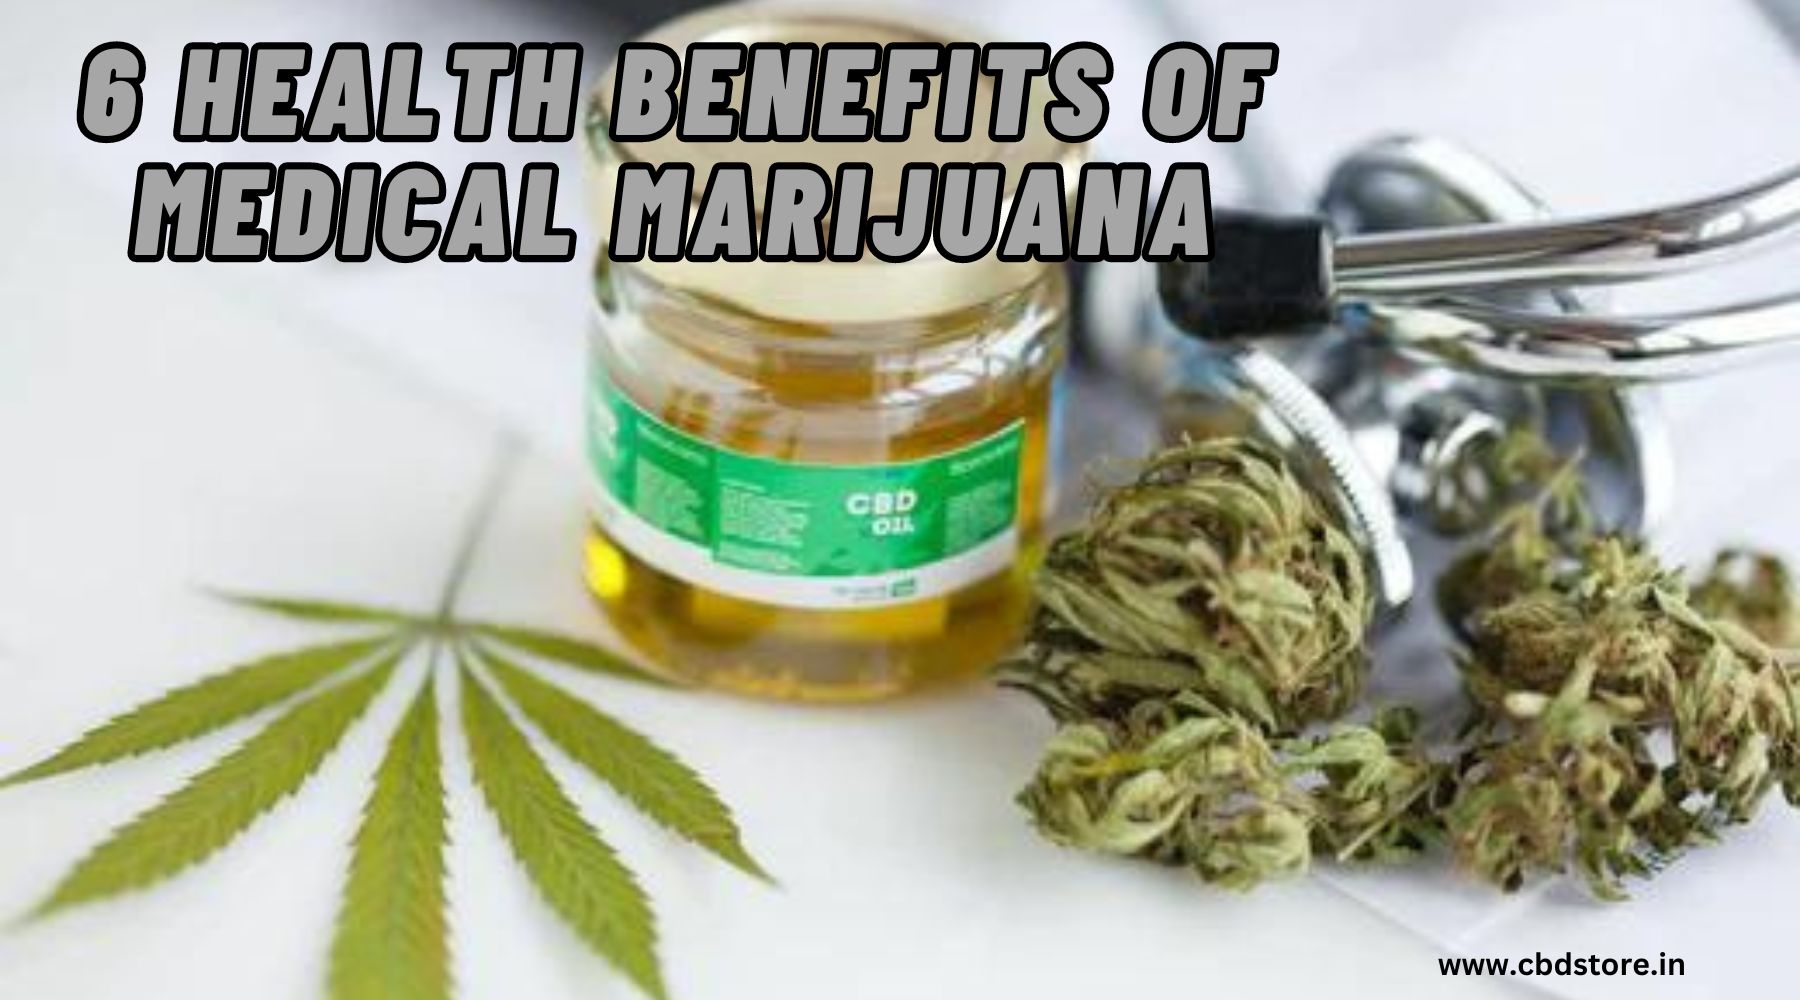 6 Health Benefits of Medical Marijuana in India - CBD Store India